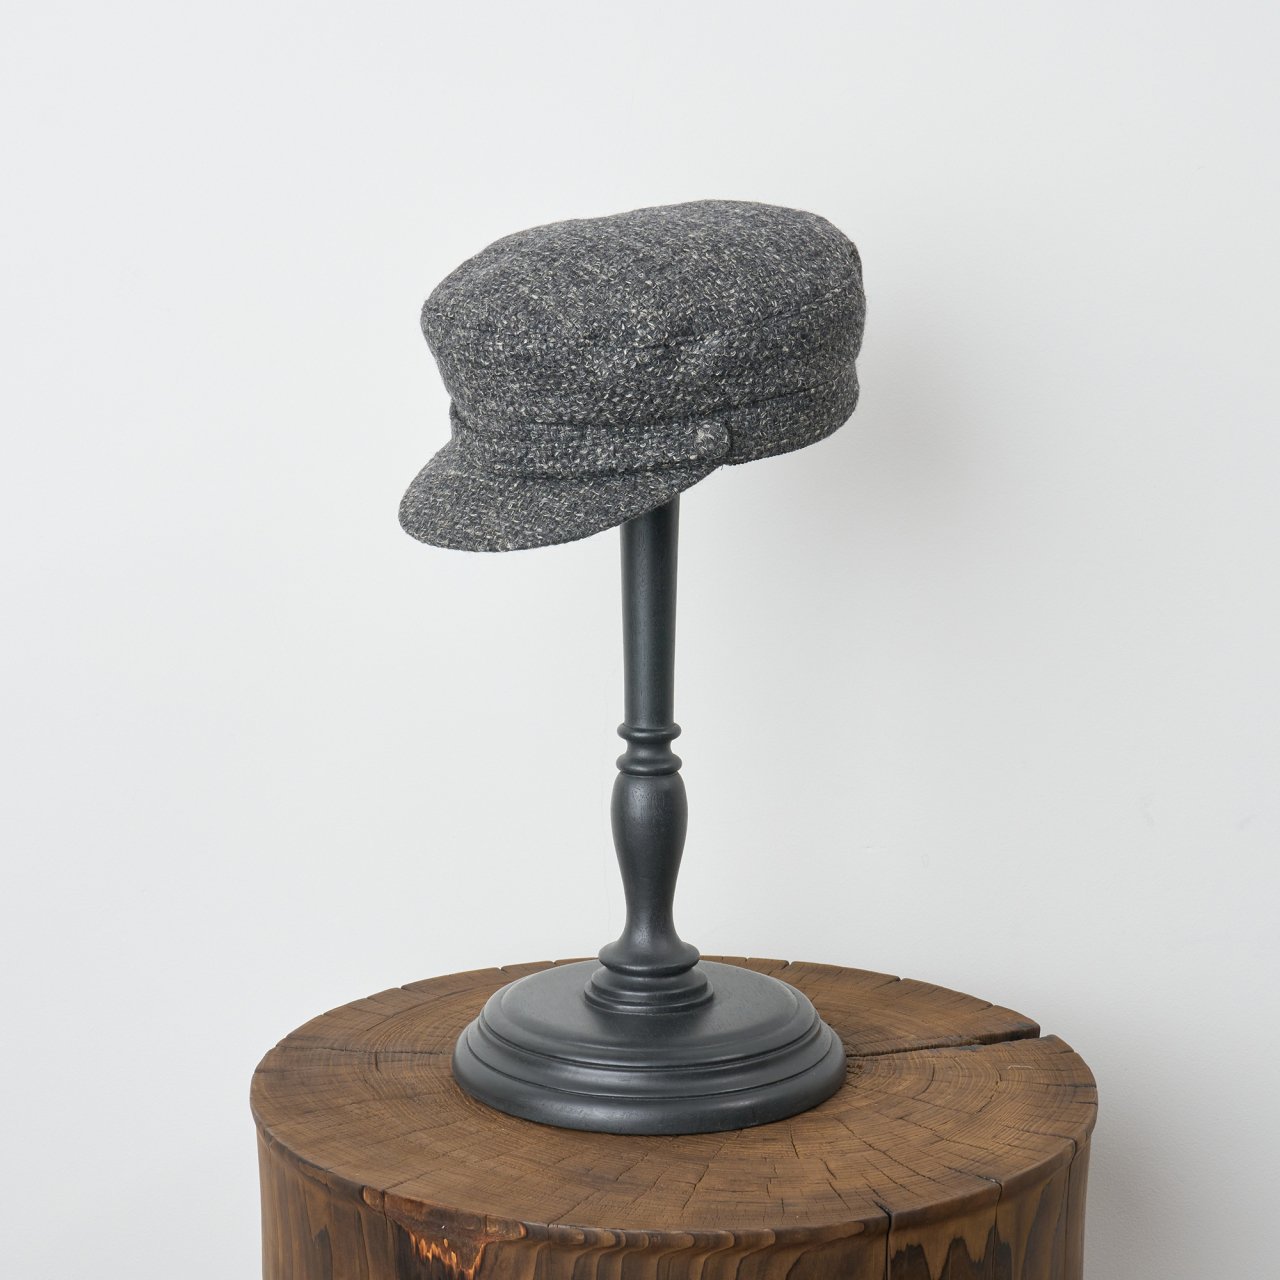 Saravah<BR>Pale Jute × saravah hat
marine cap<BR>Tweed Black